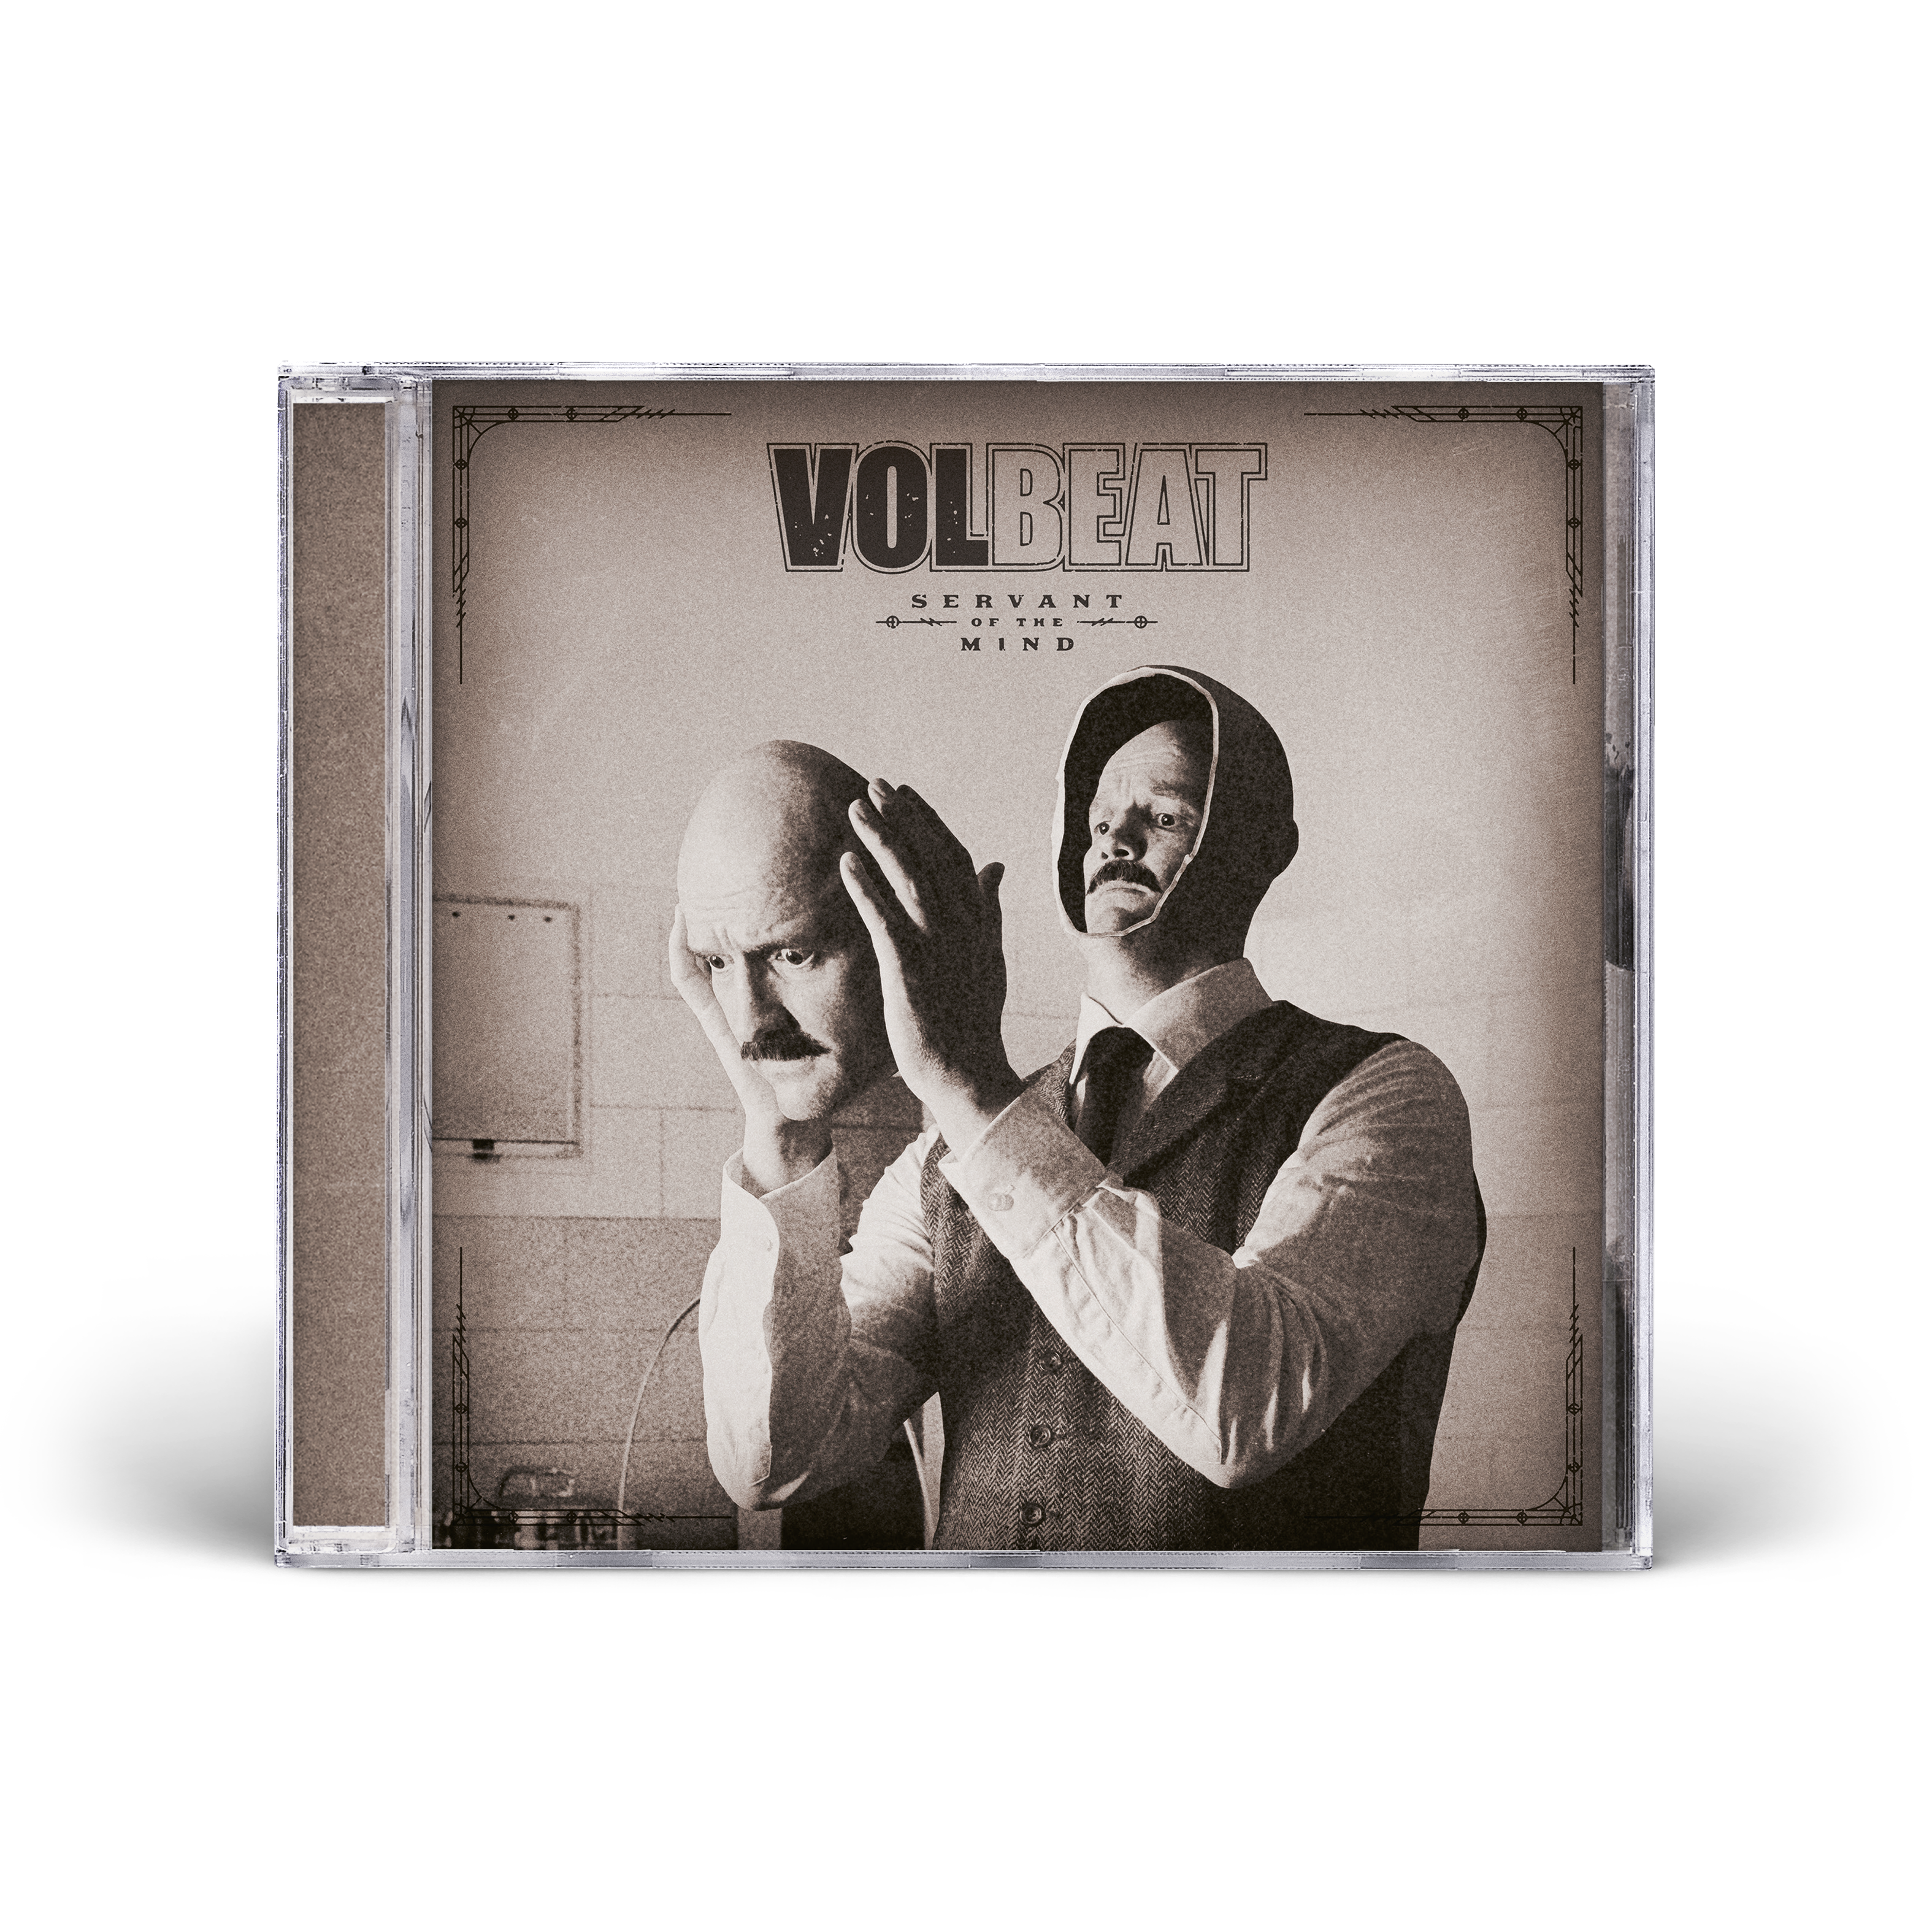 Volbeat - Servant Of The Mind: CD